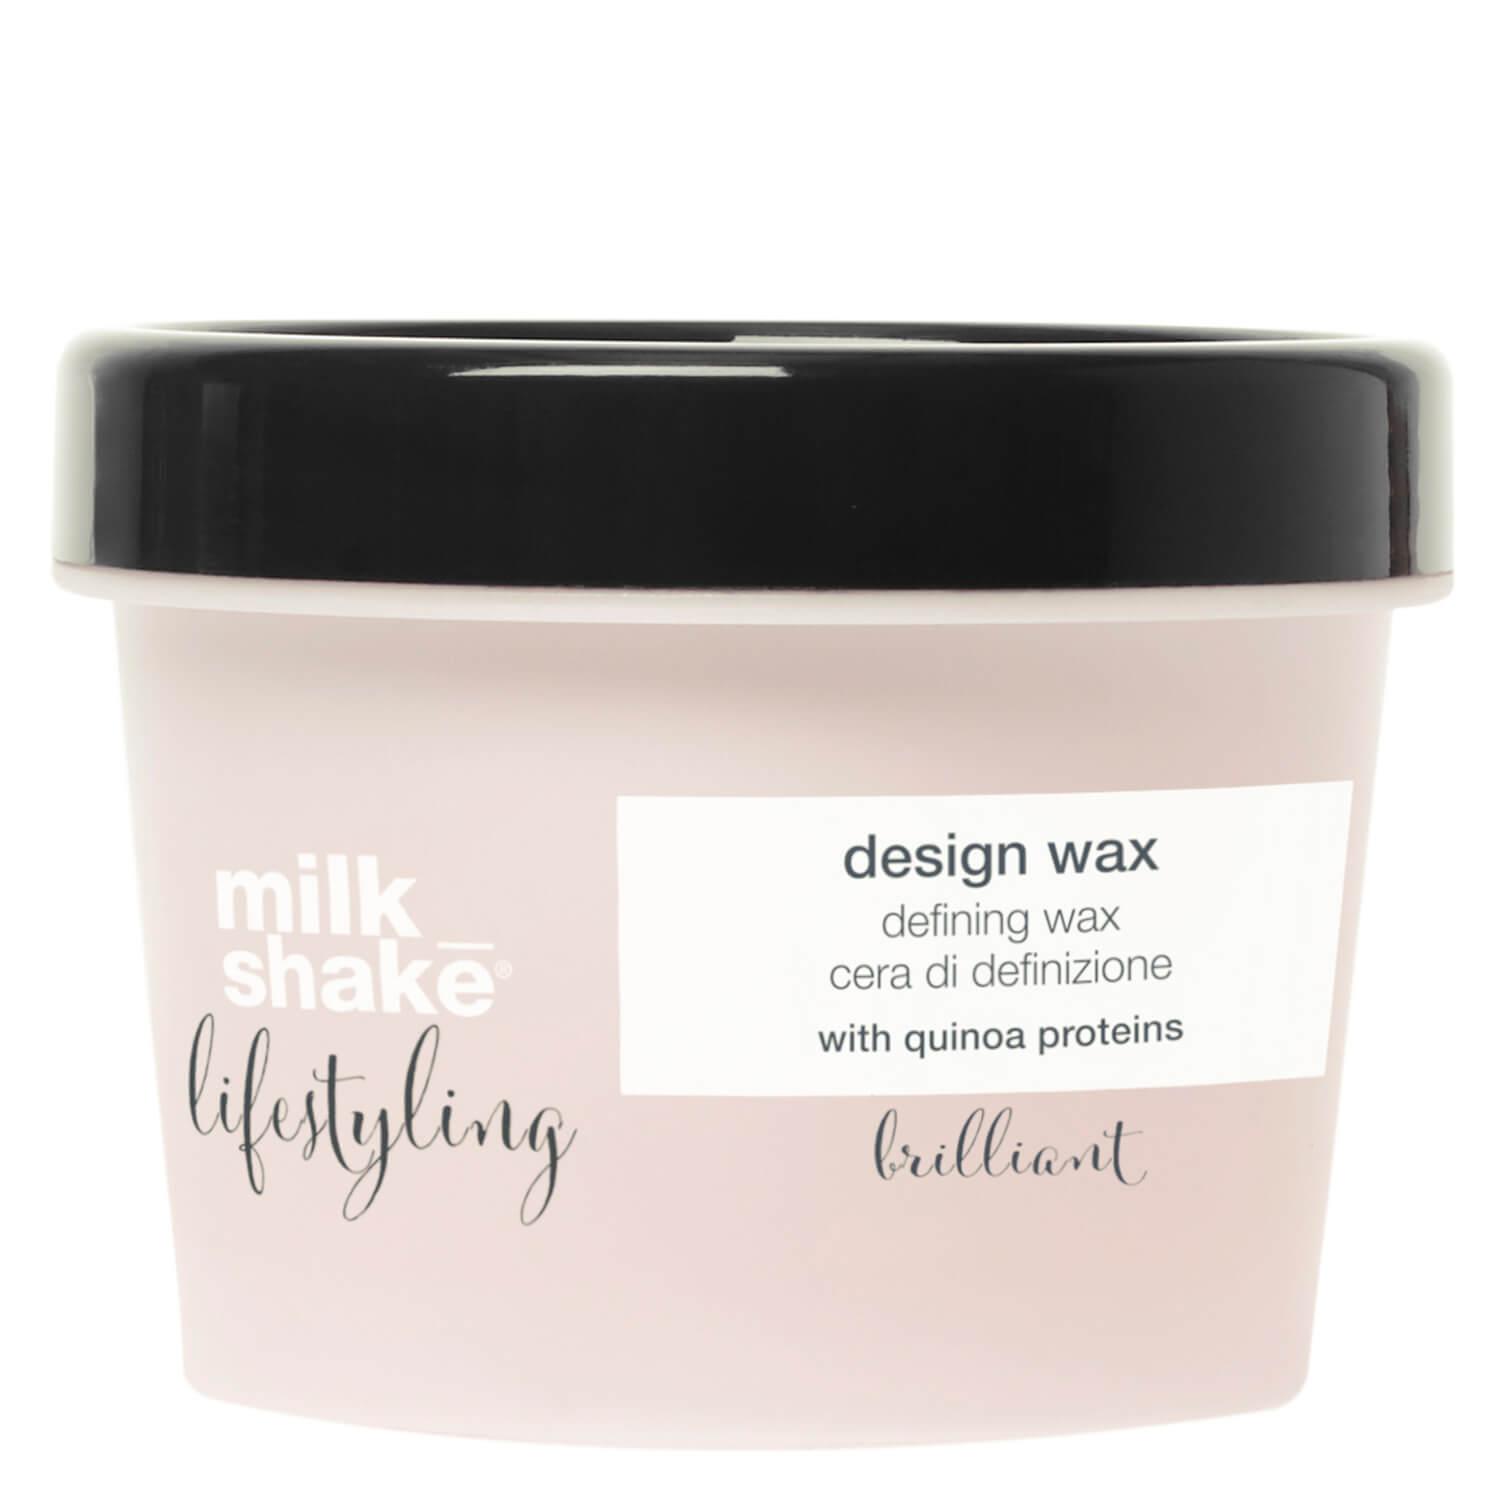 milk_shake lifestyling - design wax